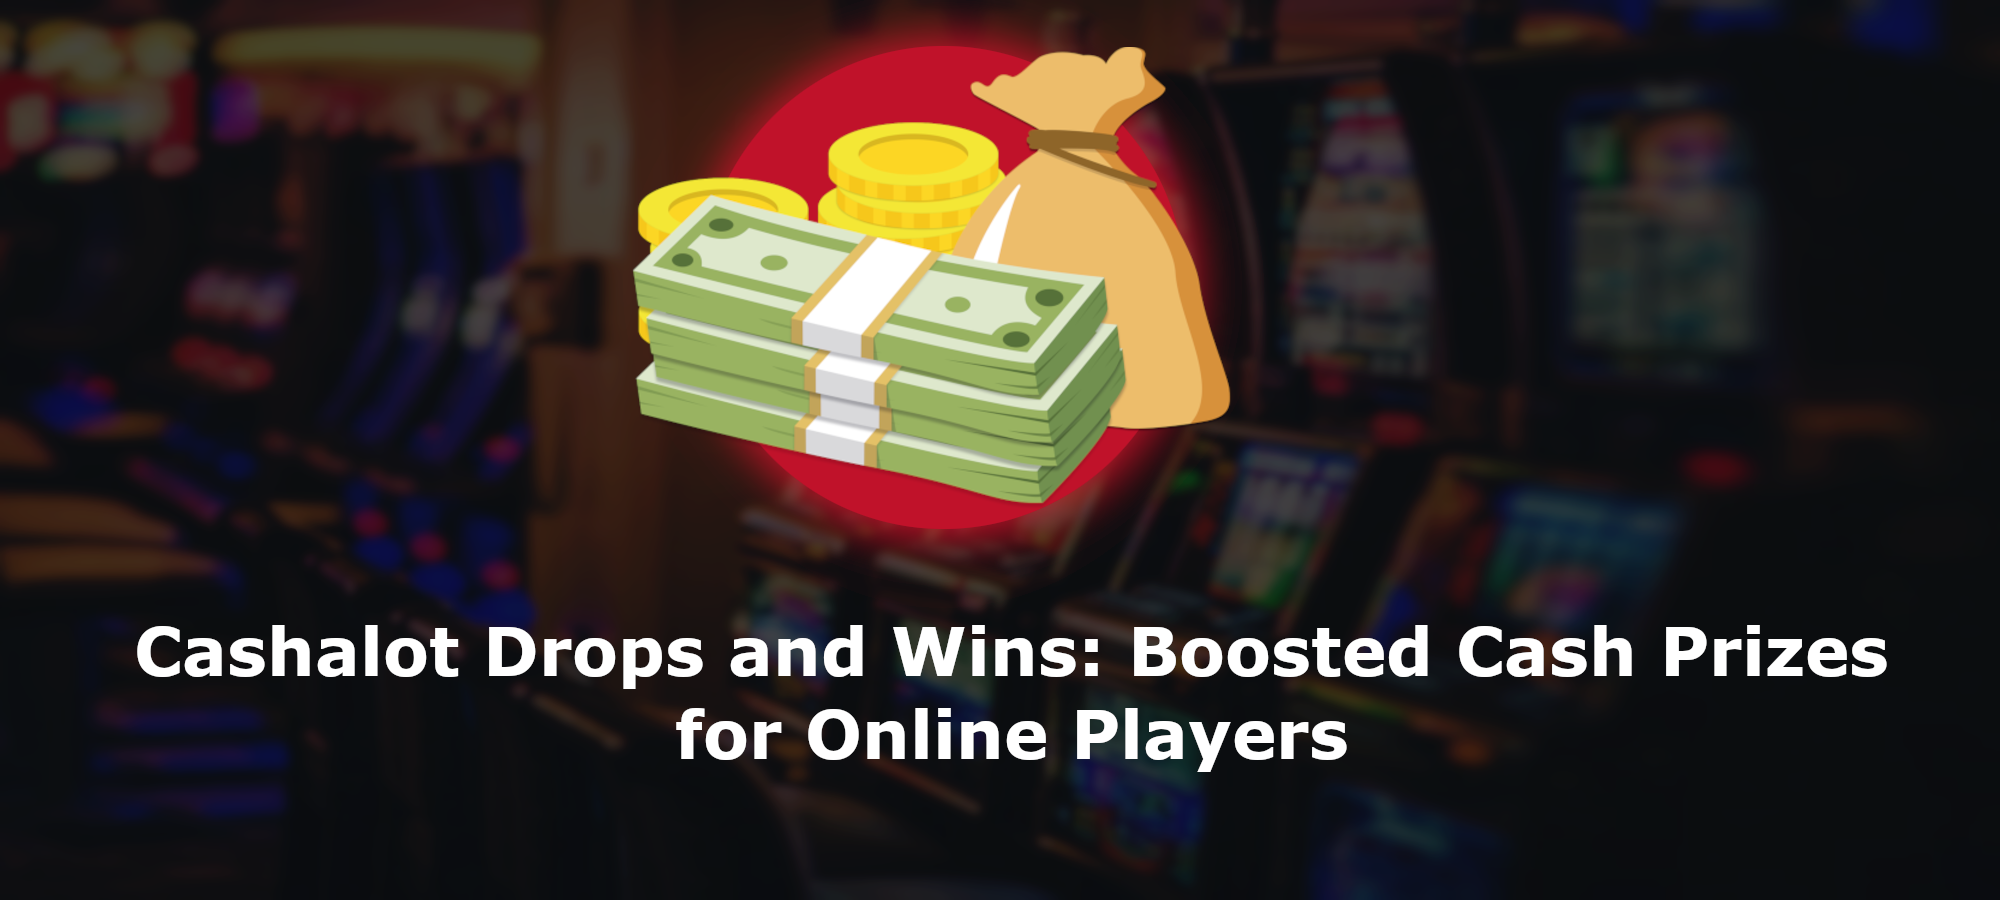 Cashalot Drops and Wins: Peningkatan Hadiah Tunai untuk Pemain Online